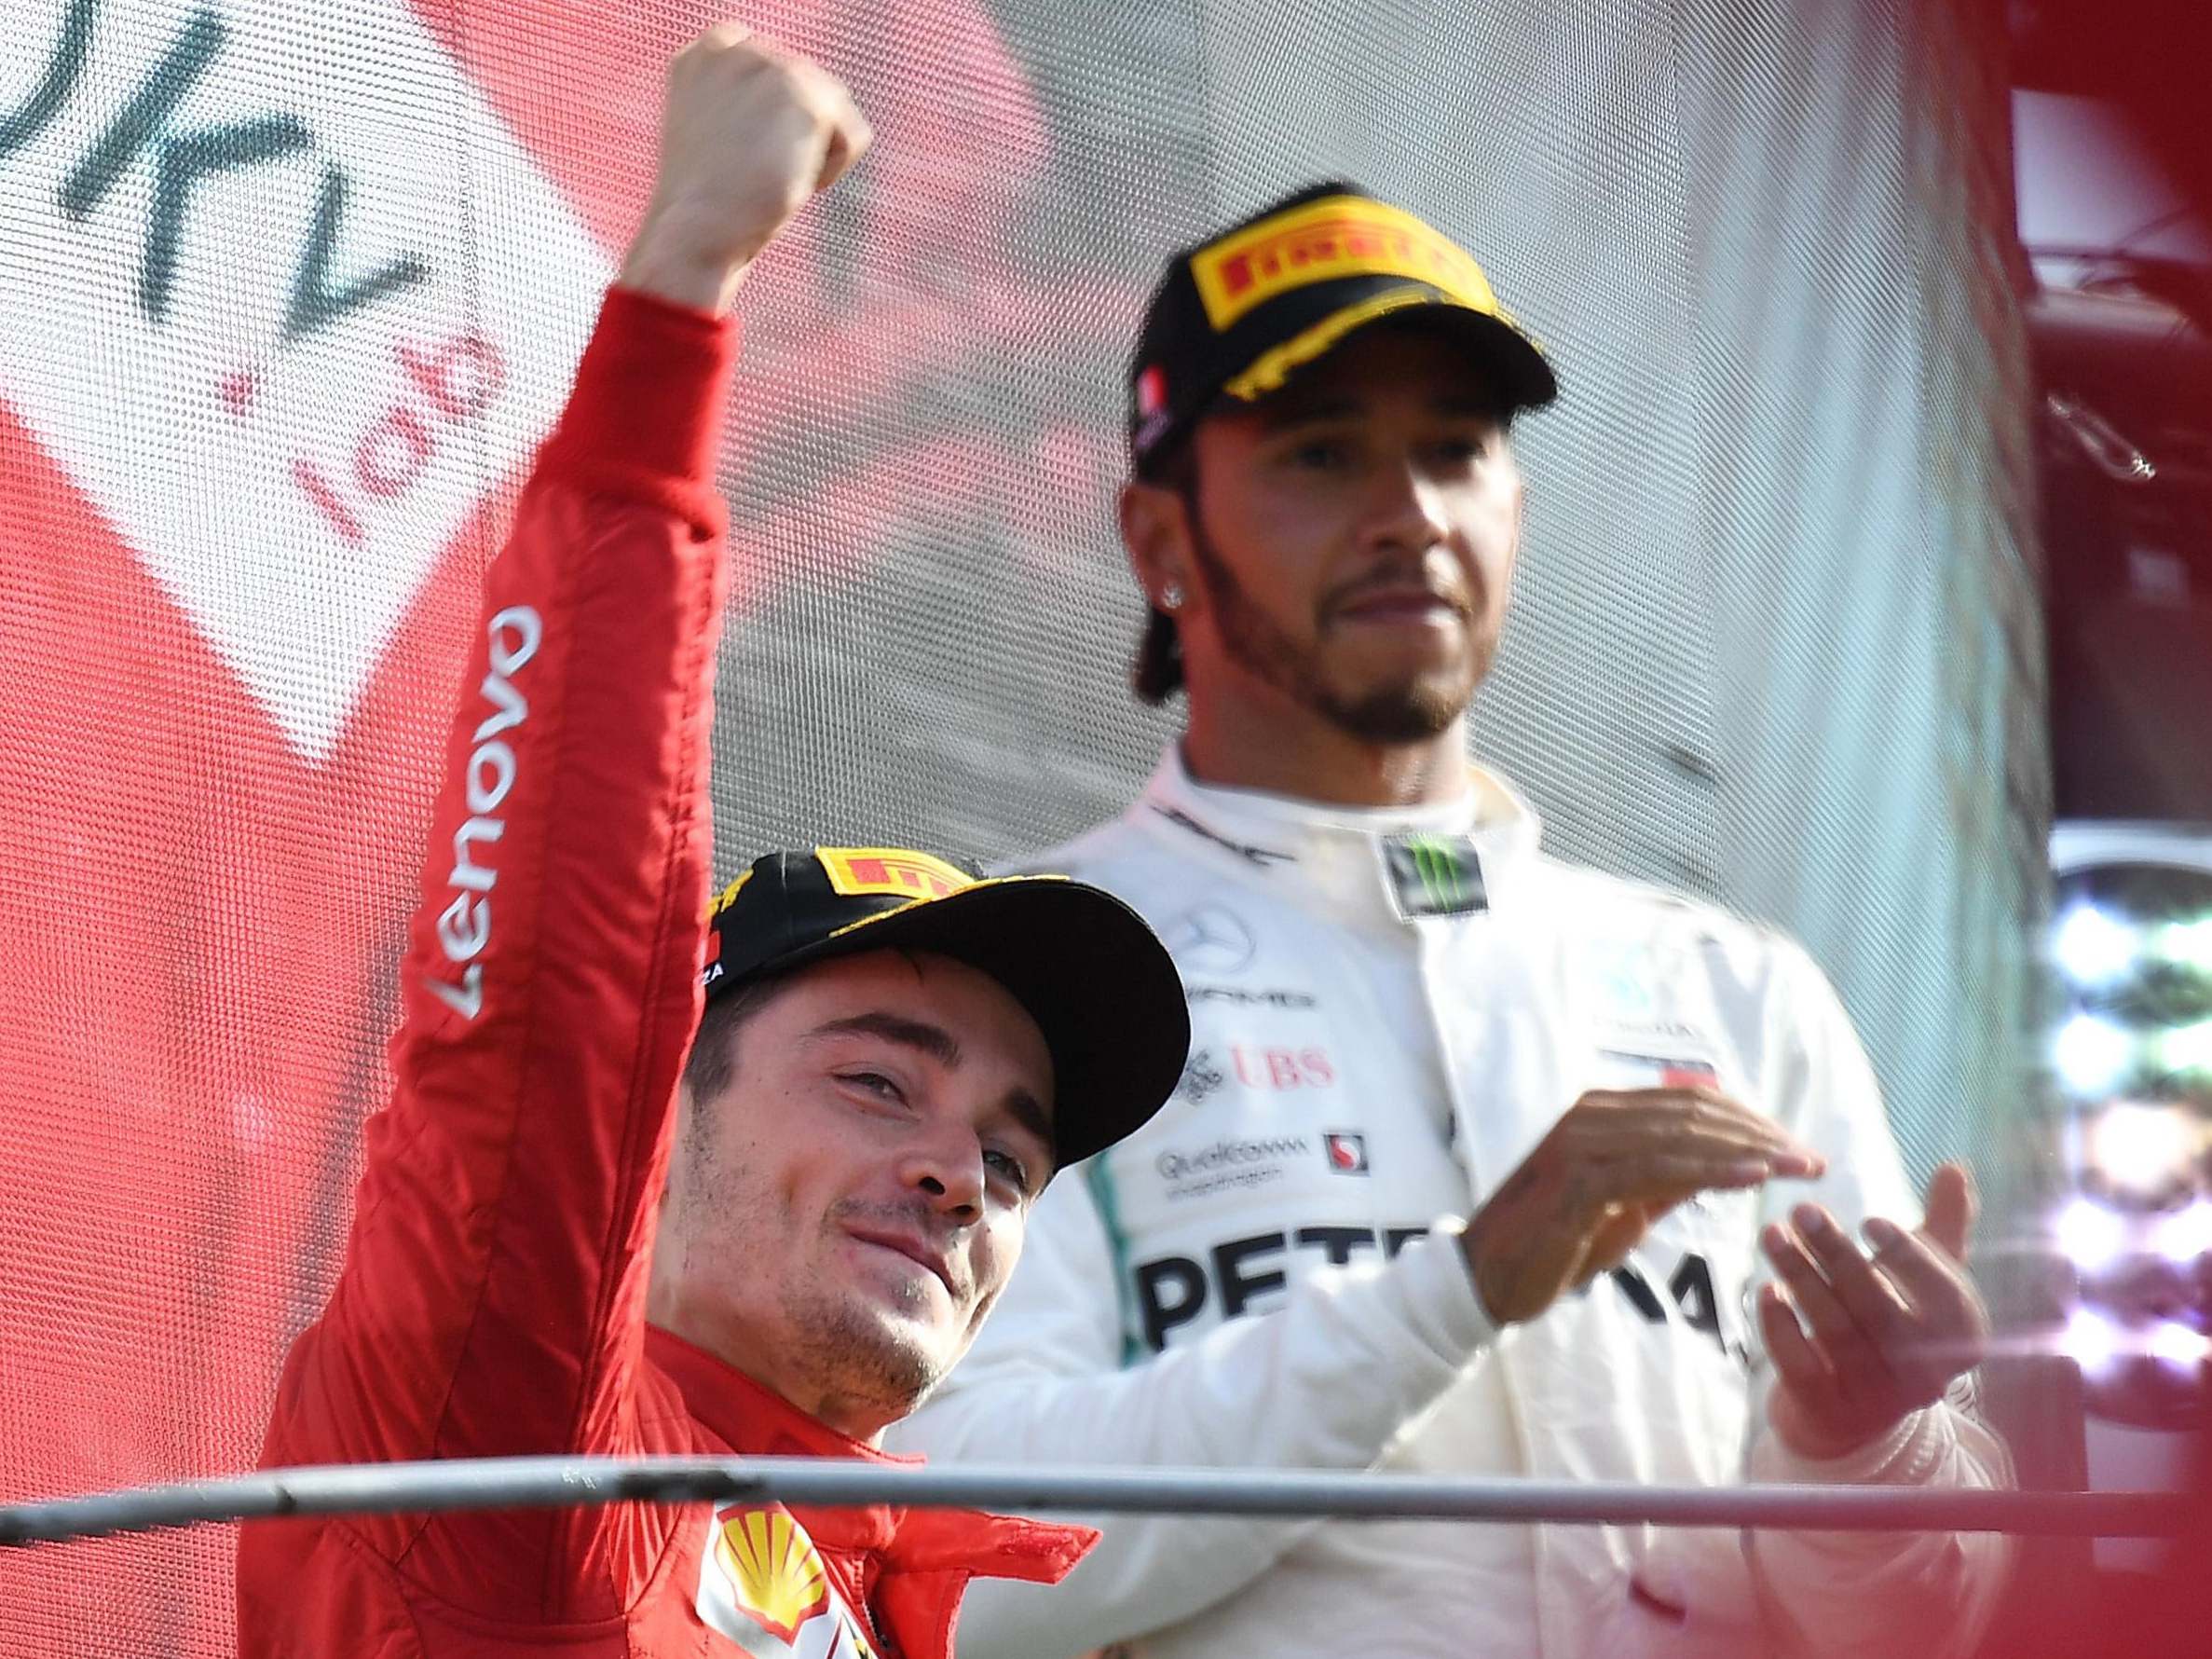 Charles Leclrec celebrates on the podium after winning the Italian Grand Prix